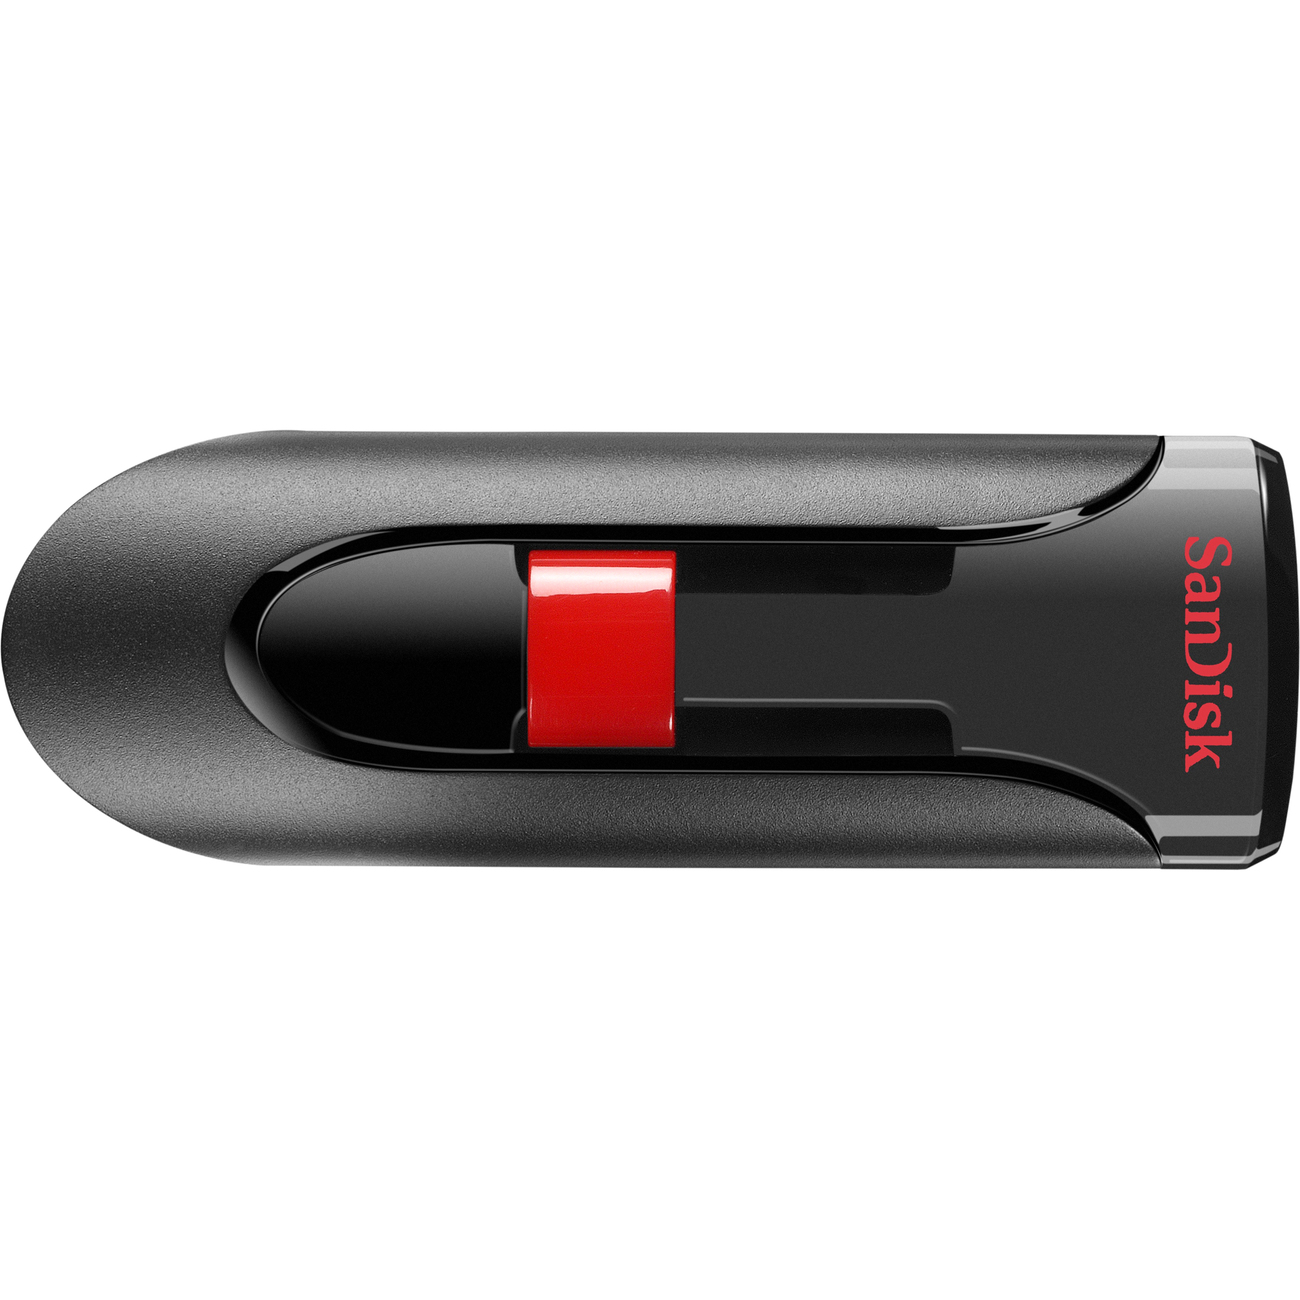 SanDisk Cruzer Glide 4GB USB Flash Drive